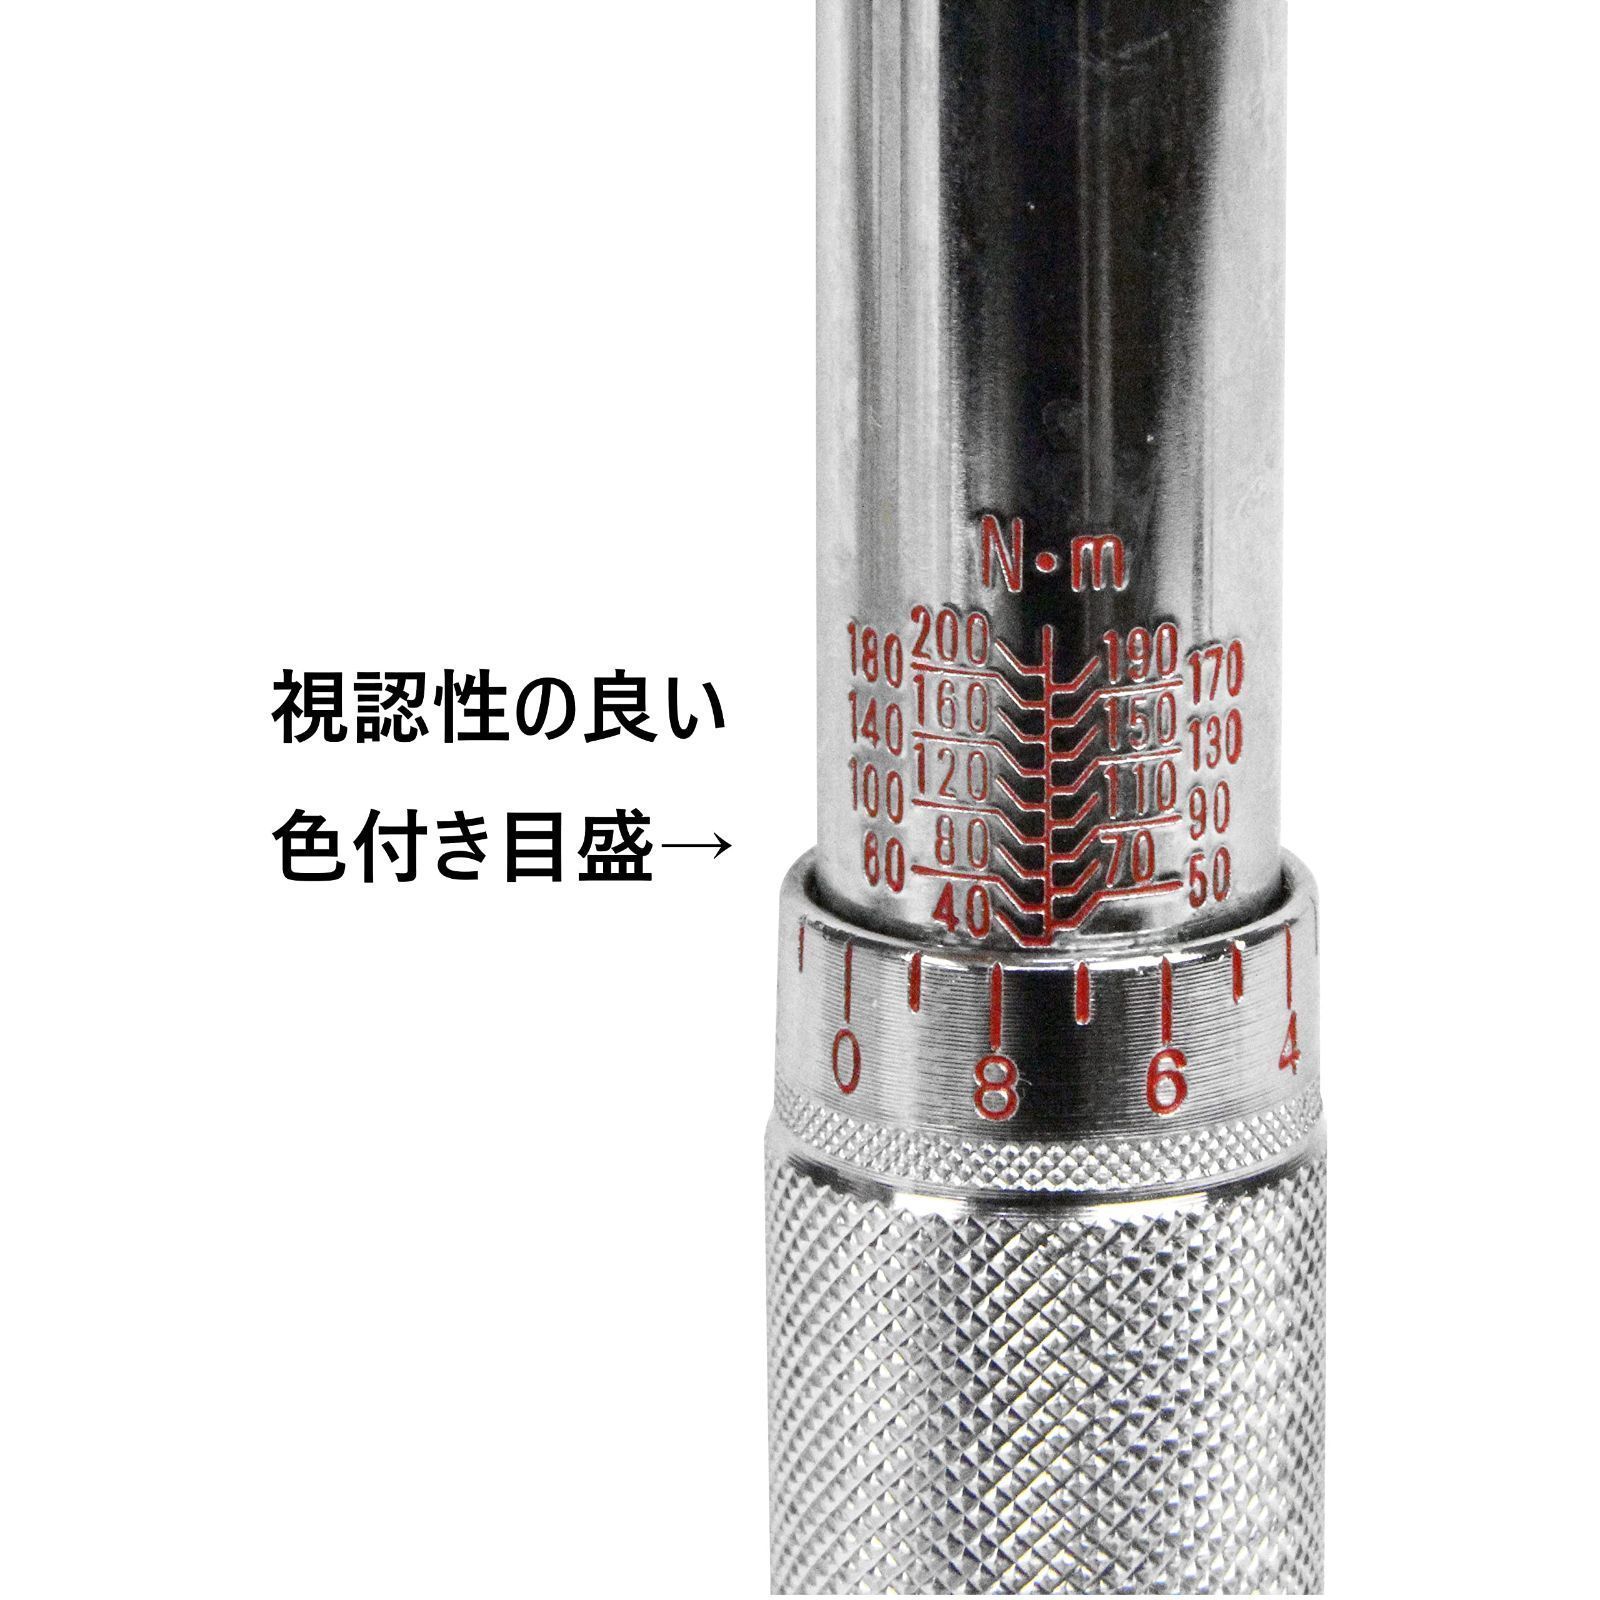 E-Value プレセット型トルクレンチ 差込角 12.7mm (1 2インチ) 40